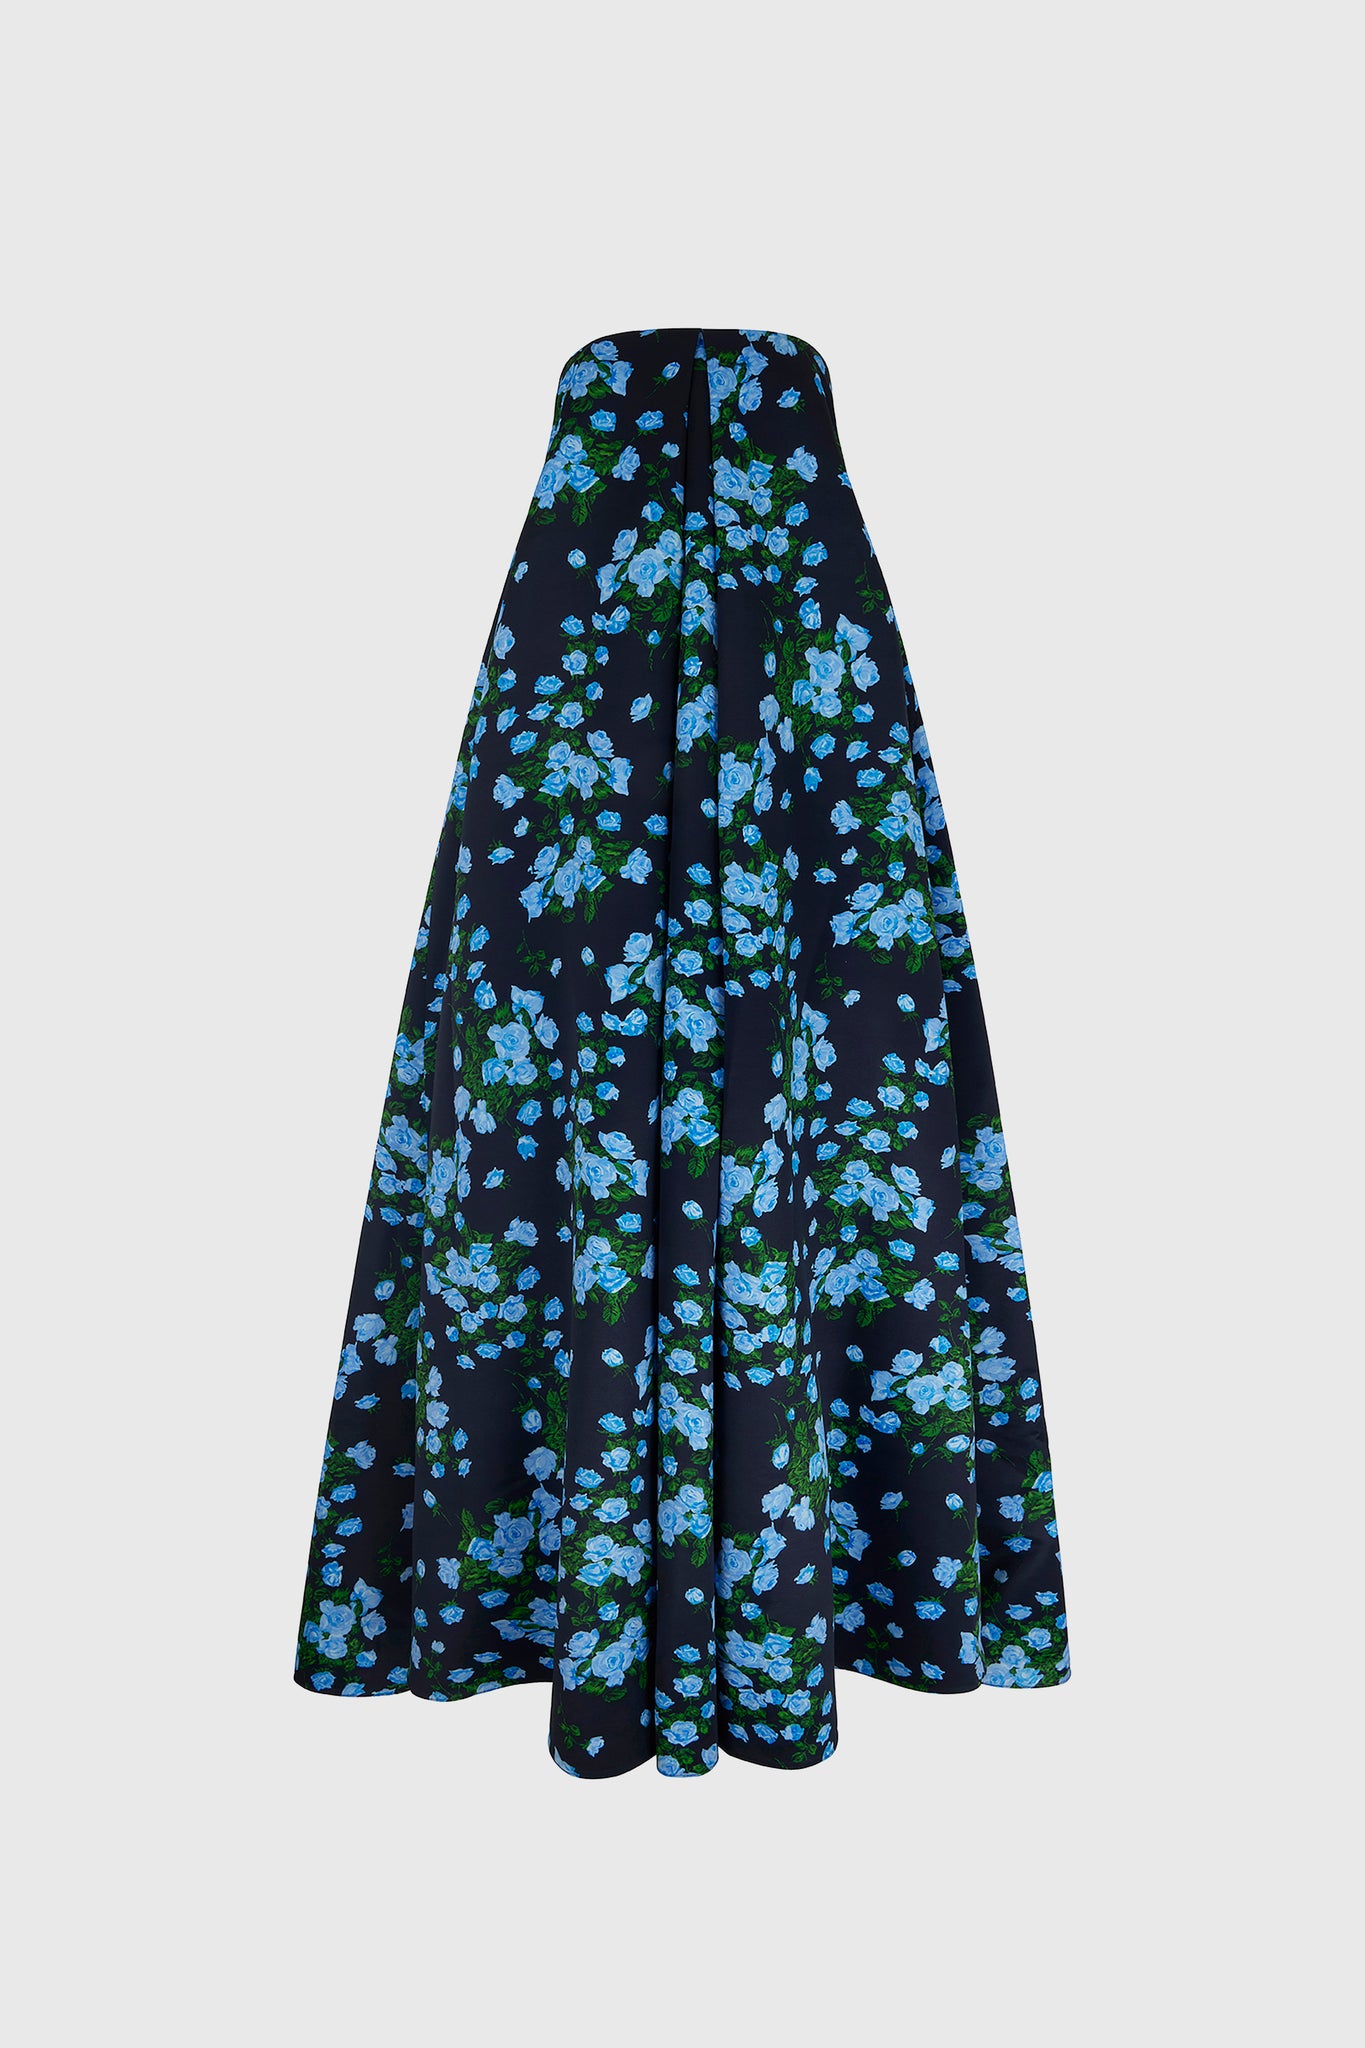 Emer Blue Rose Printed Taffeta Faille Dress | Emilia Wickstead x GOOP